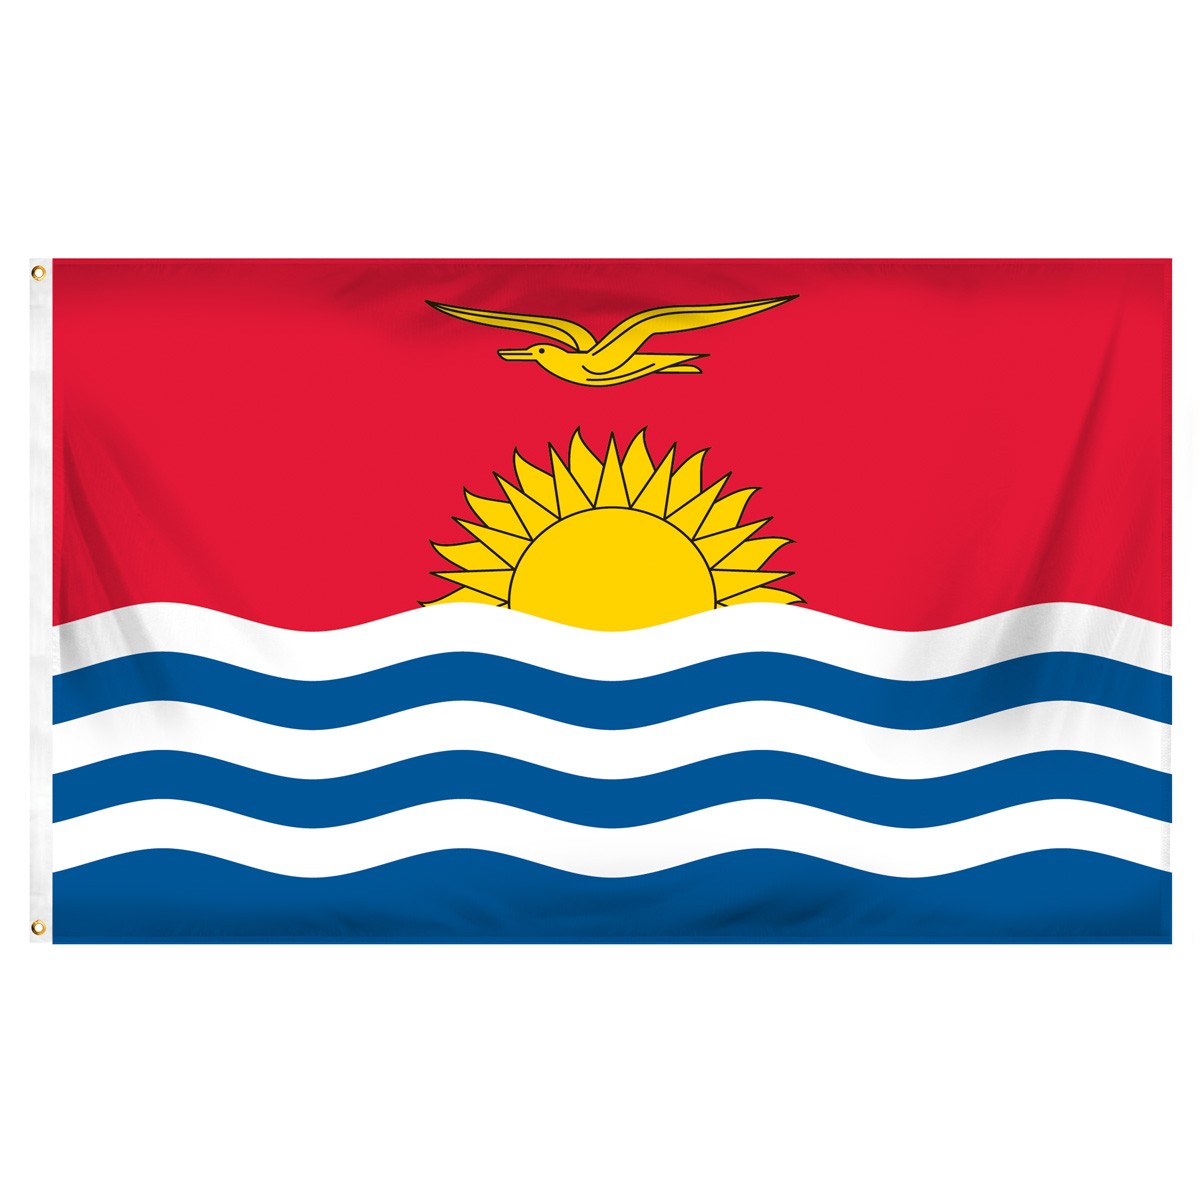 Kiribati Building Pennants and Flags